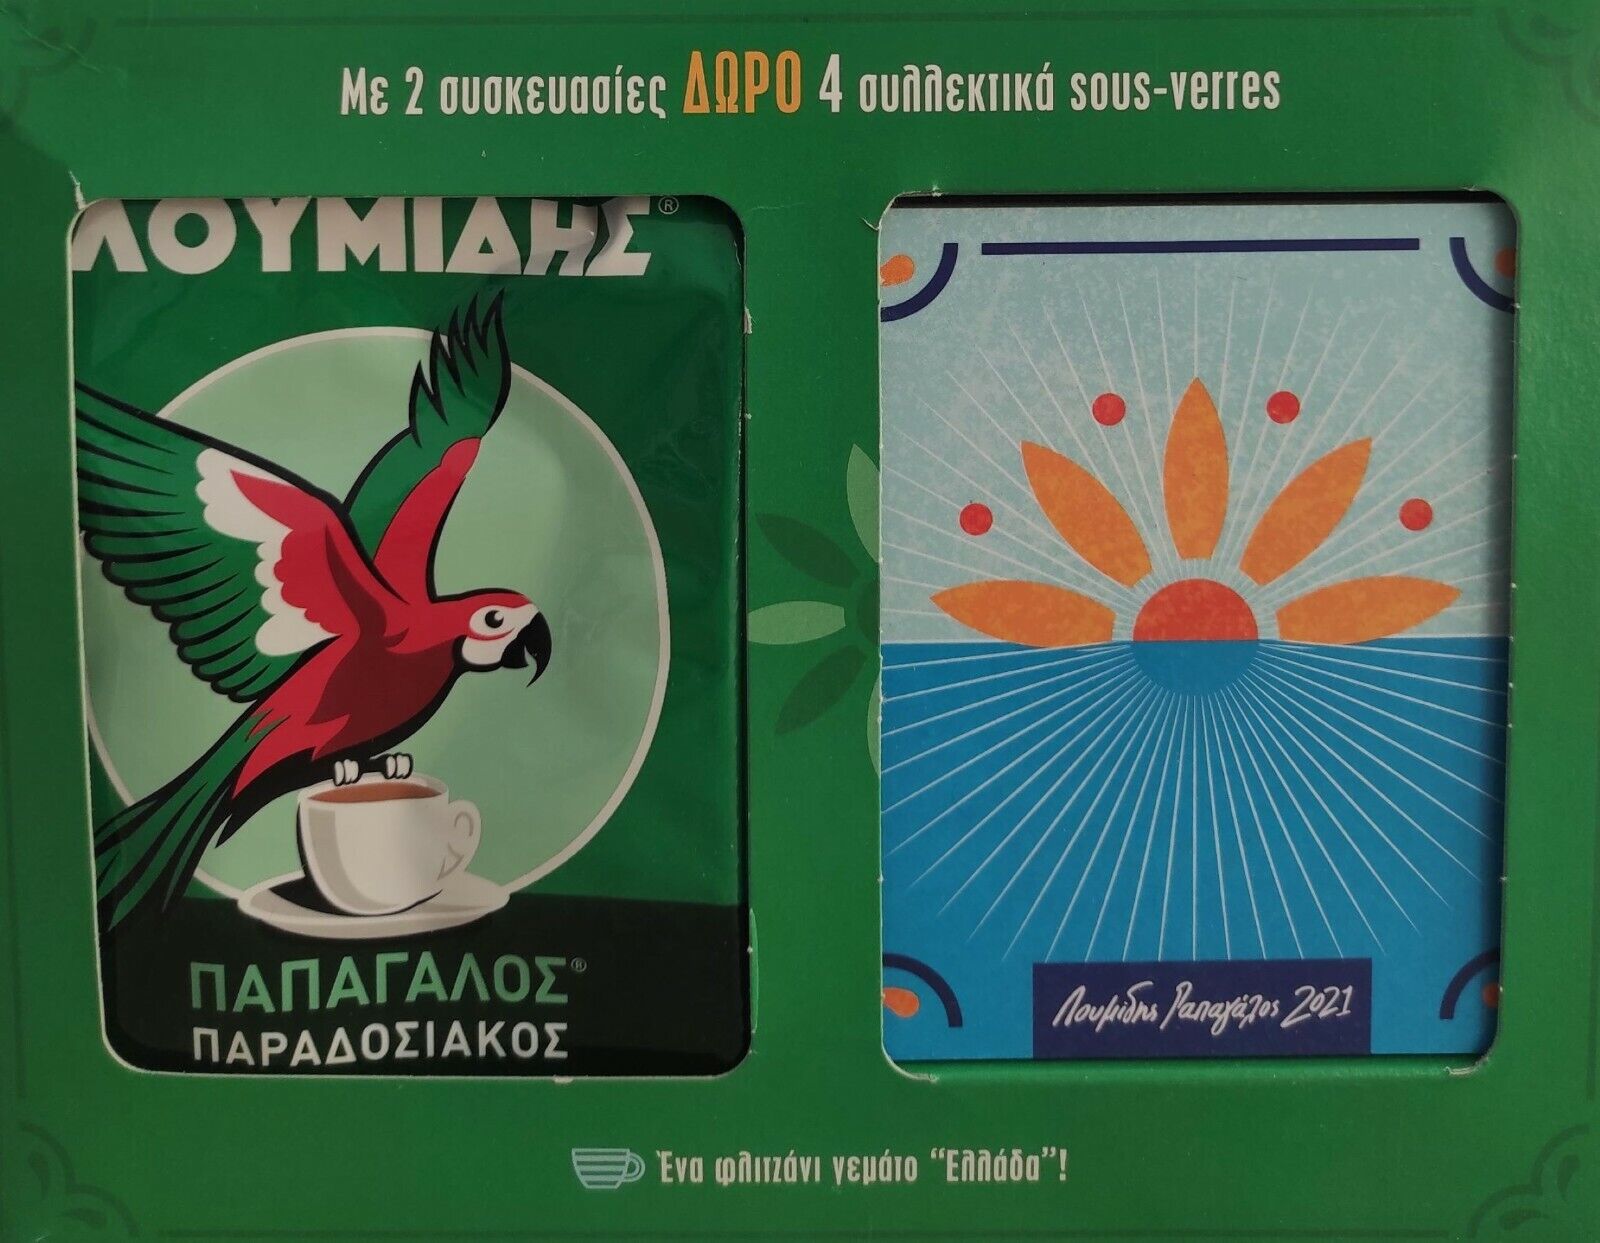 Tradycyjna grecka kawa Loumidis 2 opakowania po 194g + 4 sous-verres